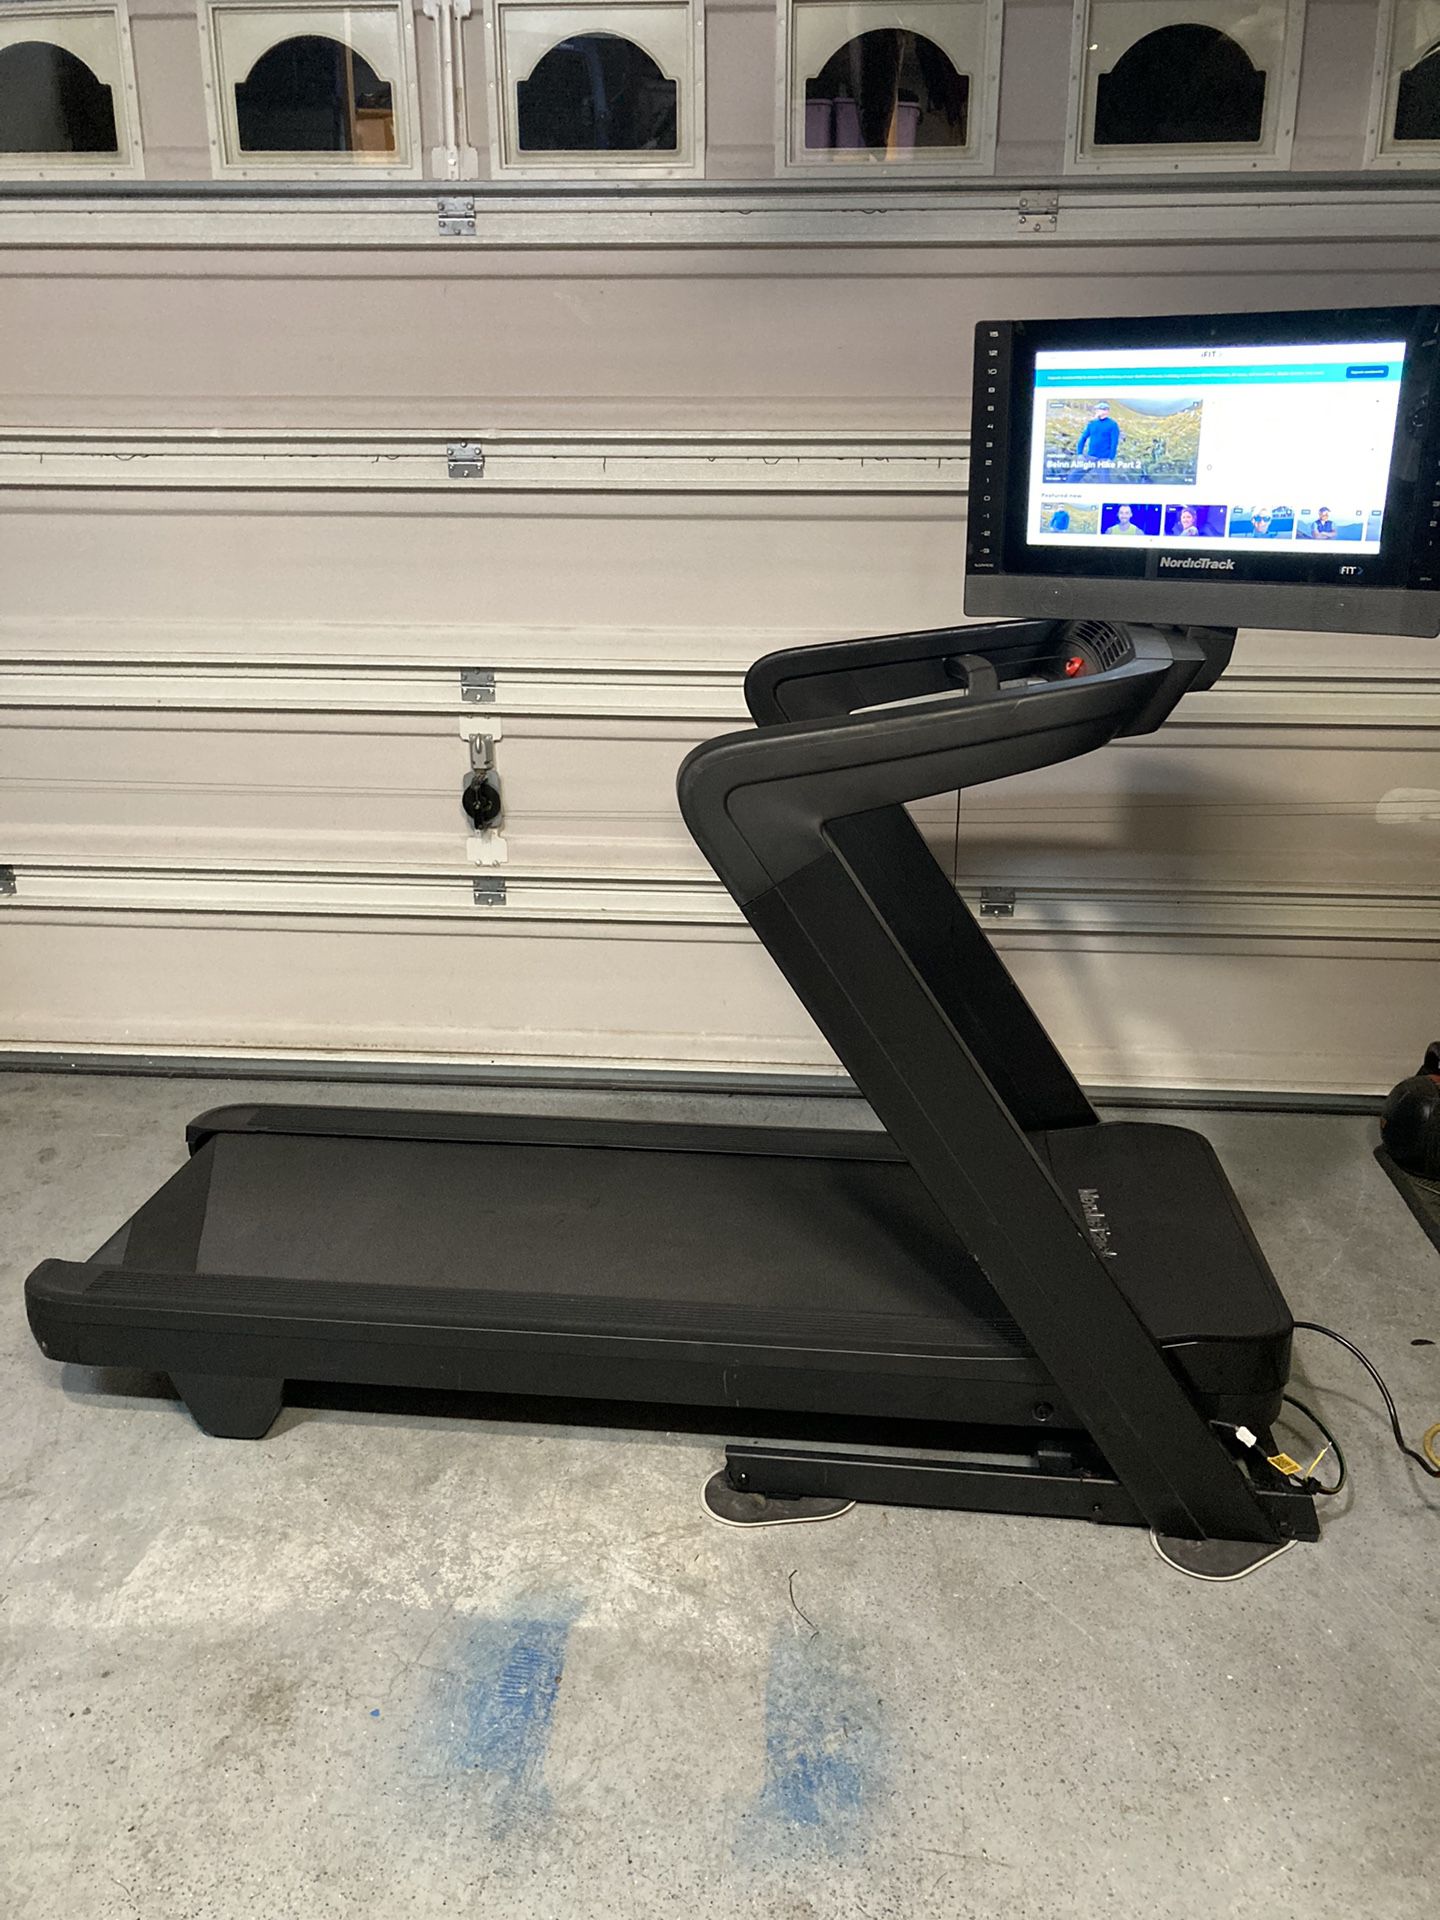 Nordictrack Commercial 2450 Treadmill 